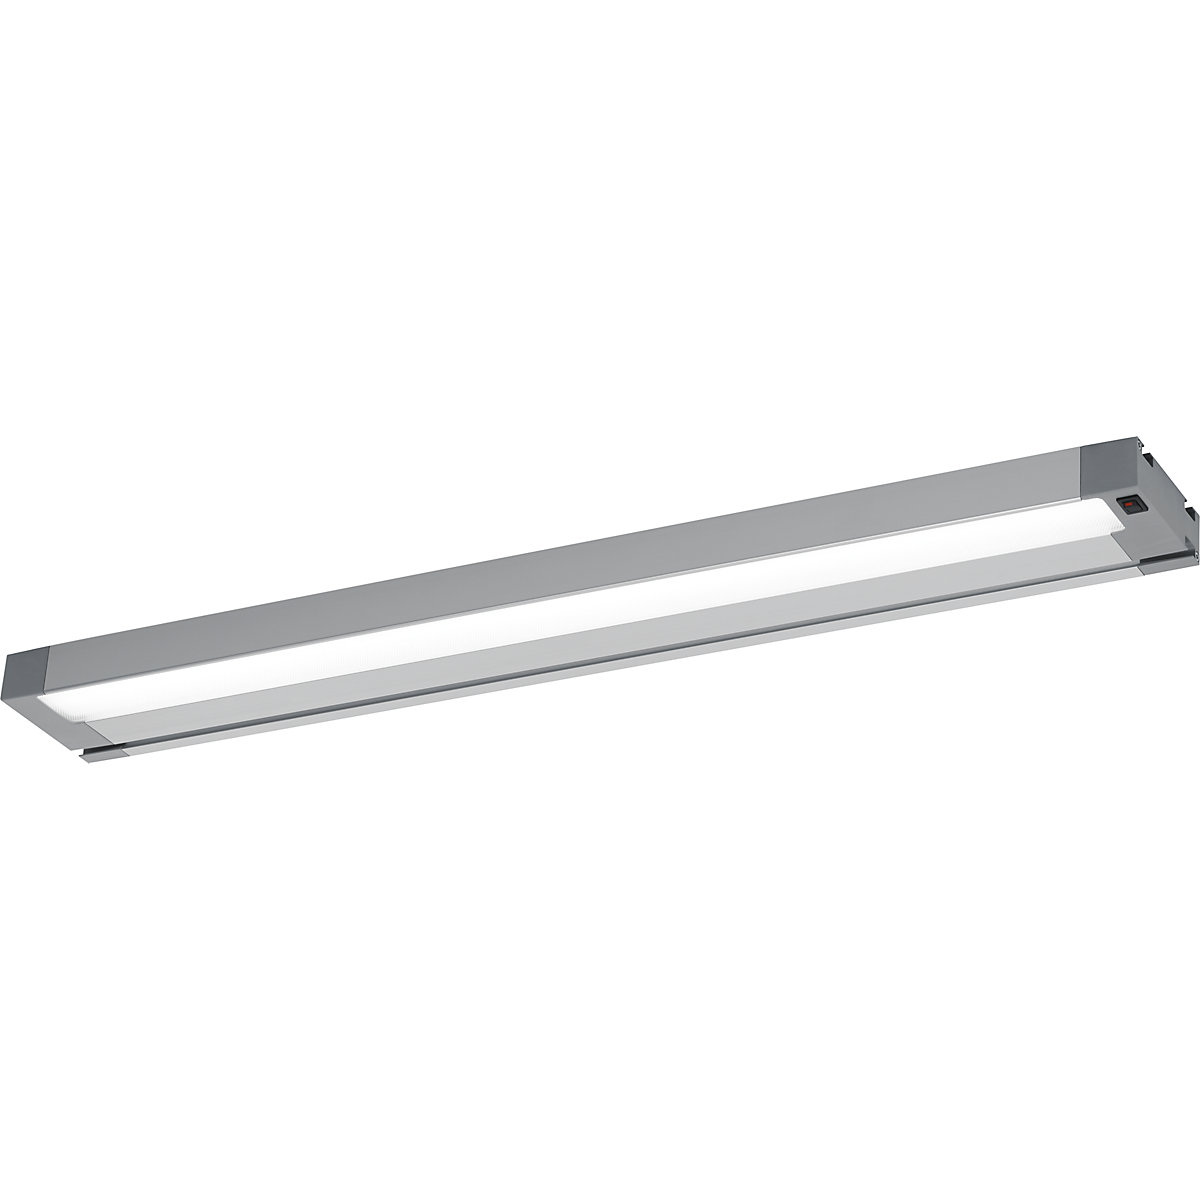 LED system light – Waldmann, aluminium, length 899 mm, 35 W-3